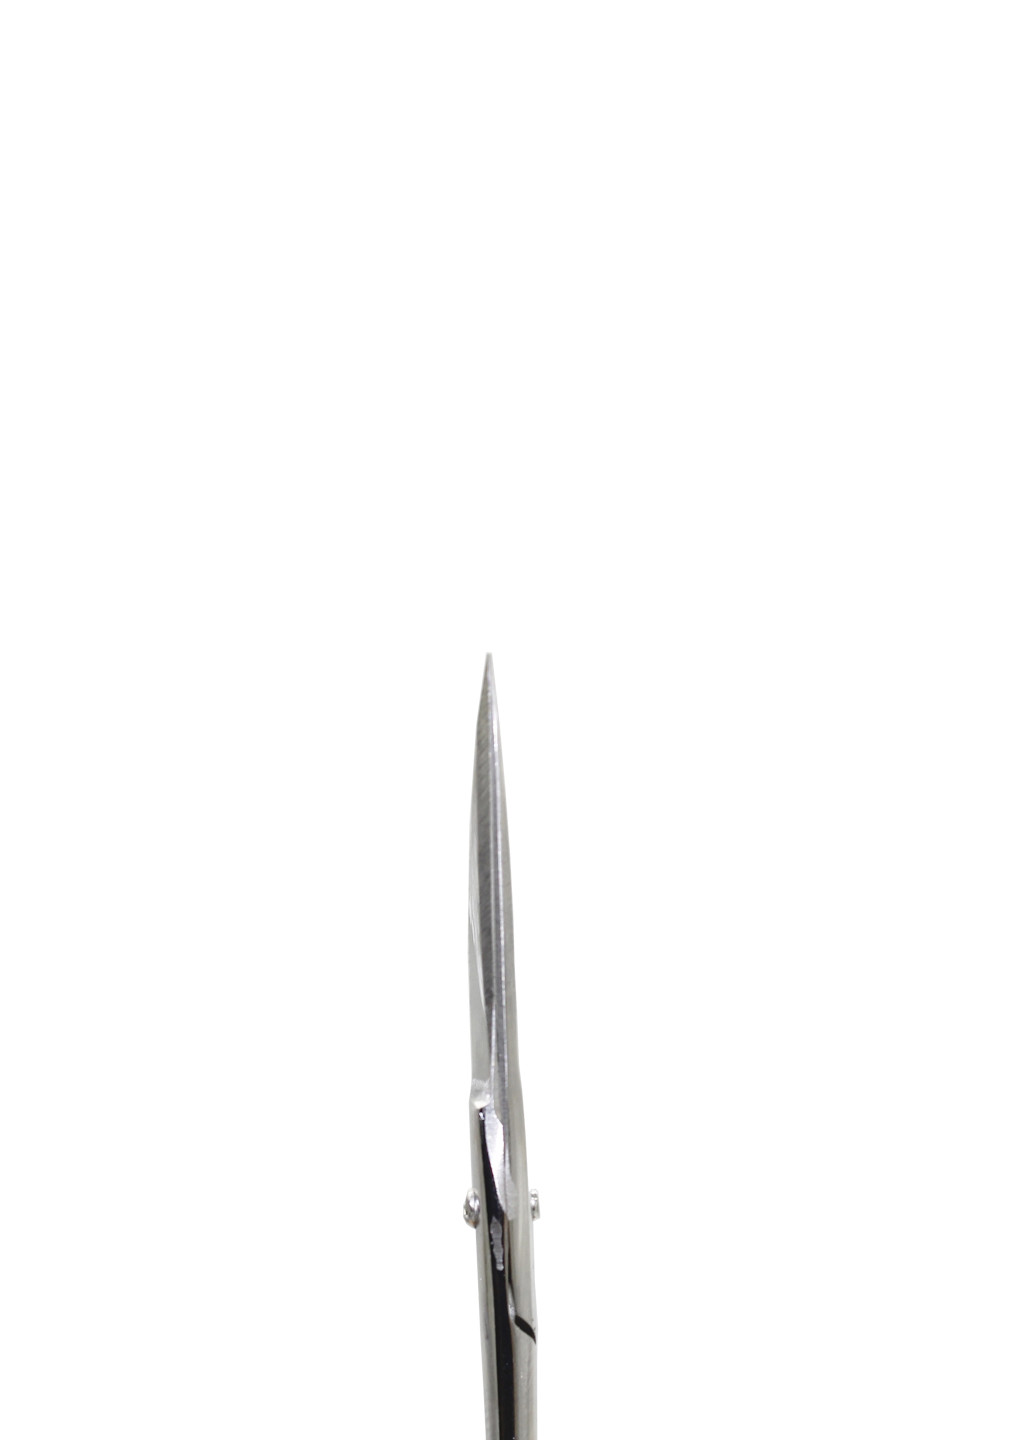 Ножницы для кутикул 9132 блистер SPL (200769563)